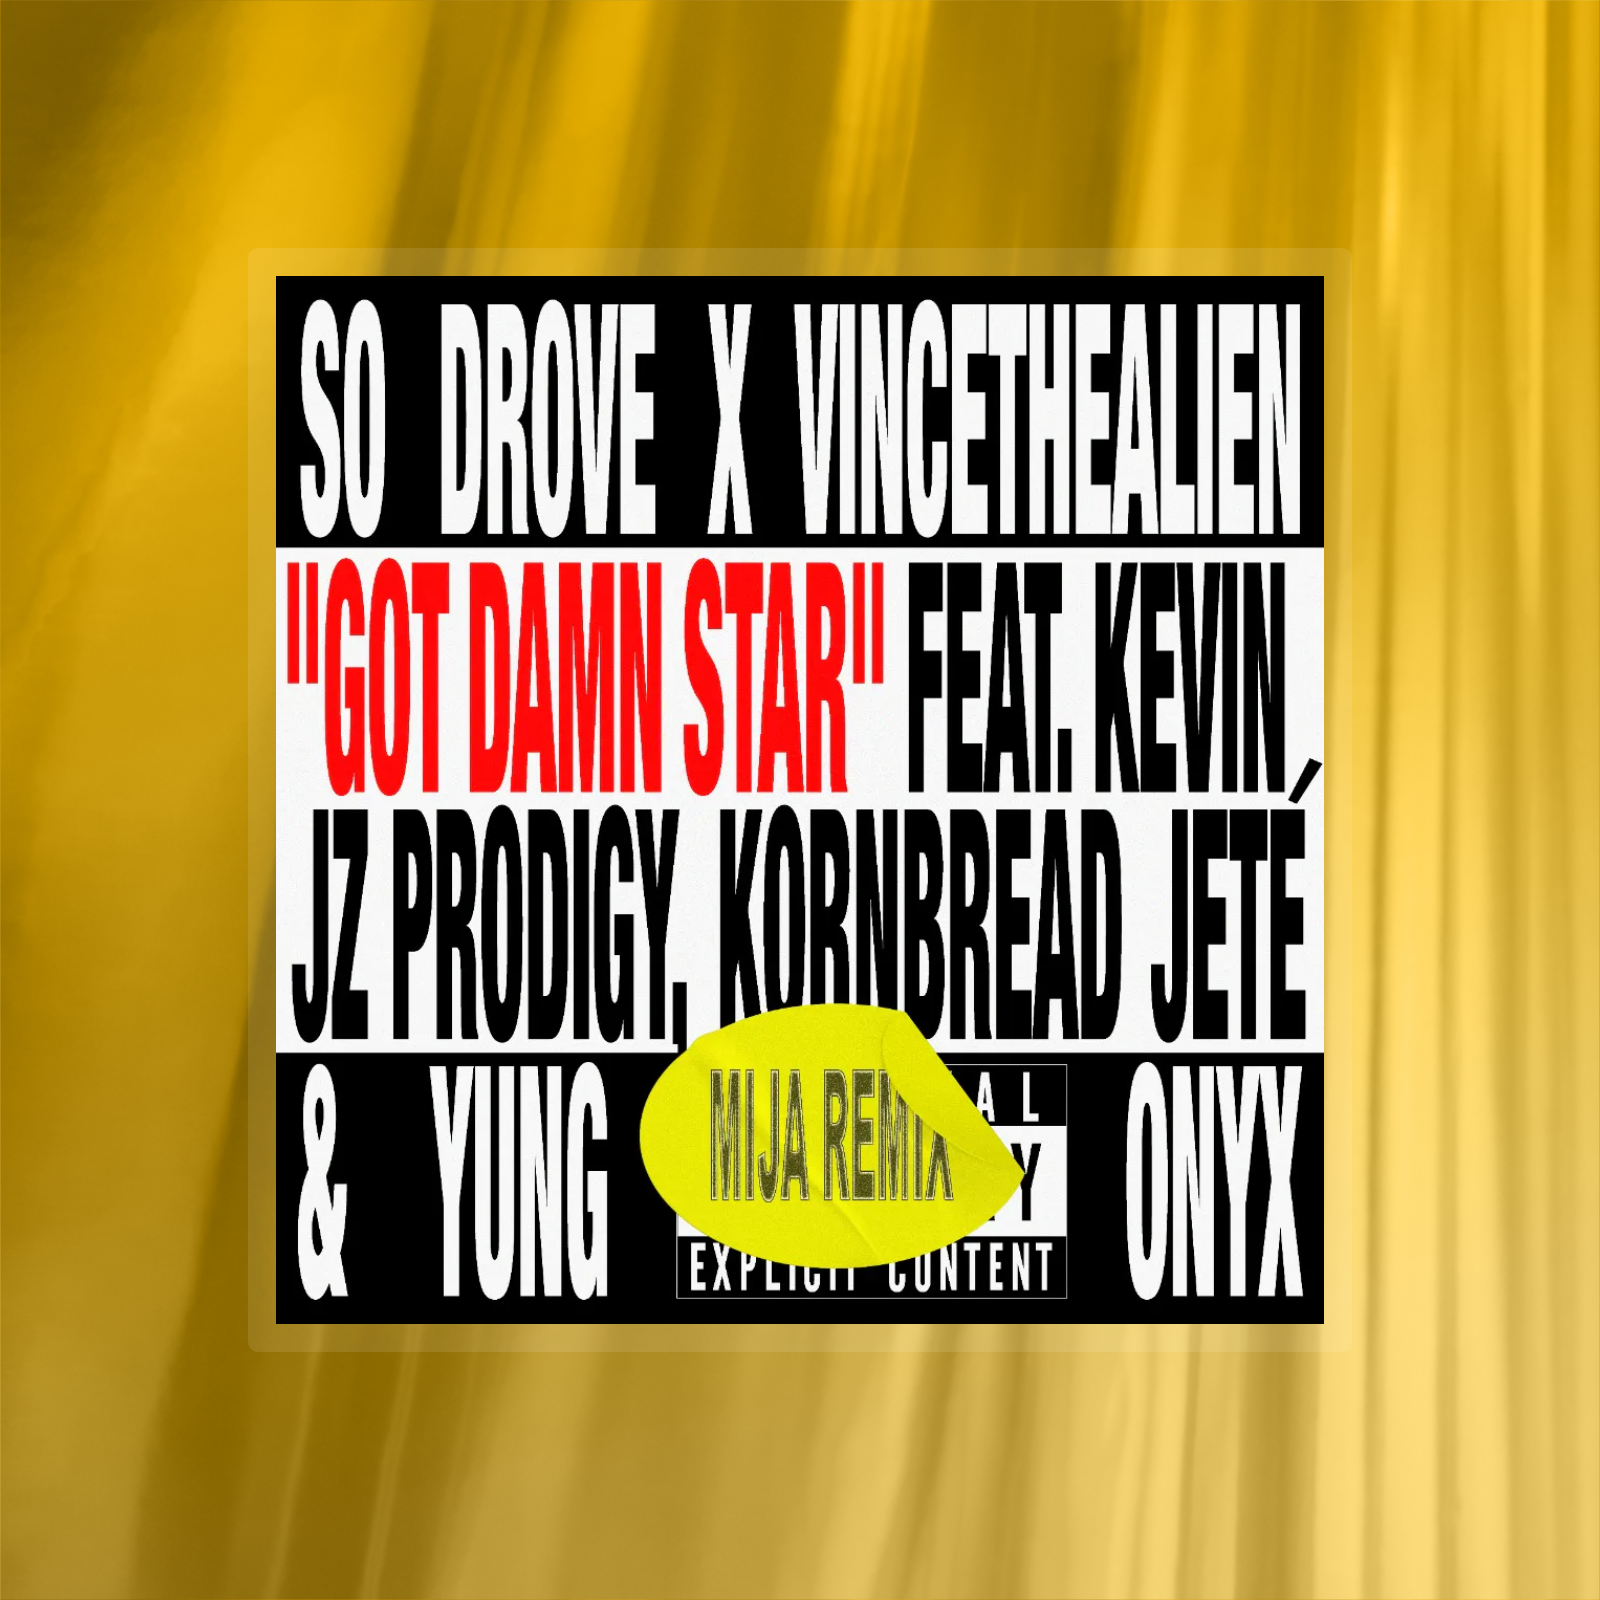 So Drove x vincethealien "Got Damn Star" ft. Kevin Jz Prodigy, Kornbread & Yung Onyx (Mija Remix)